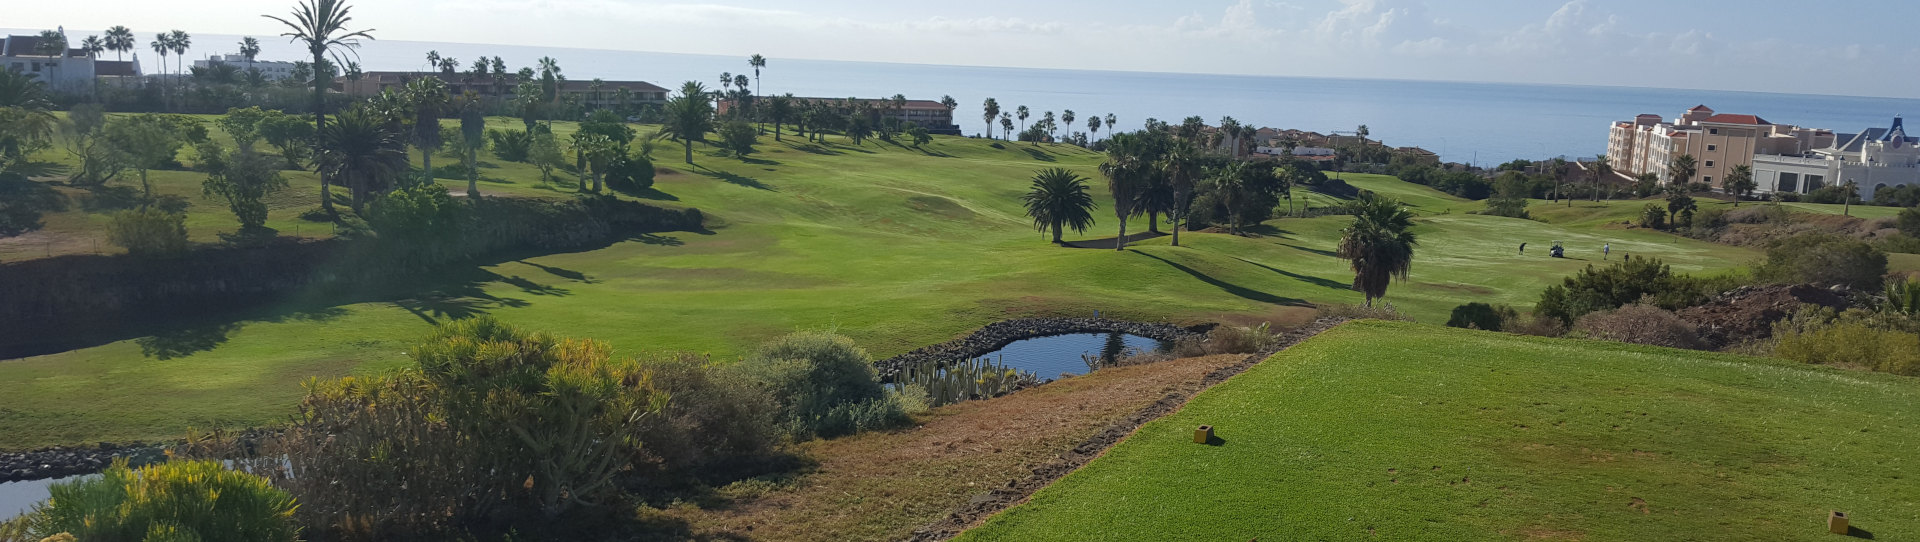 Spain golf holidays - Golf del Sur Trio Experience - Photo 1